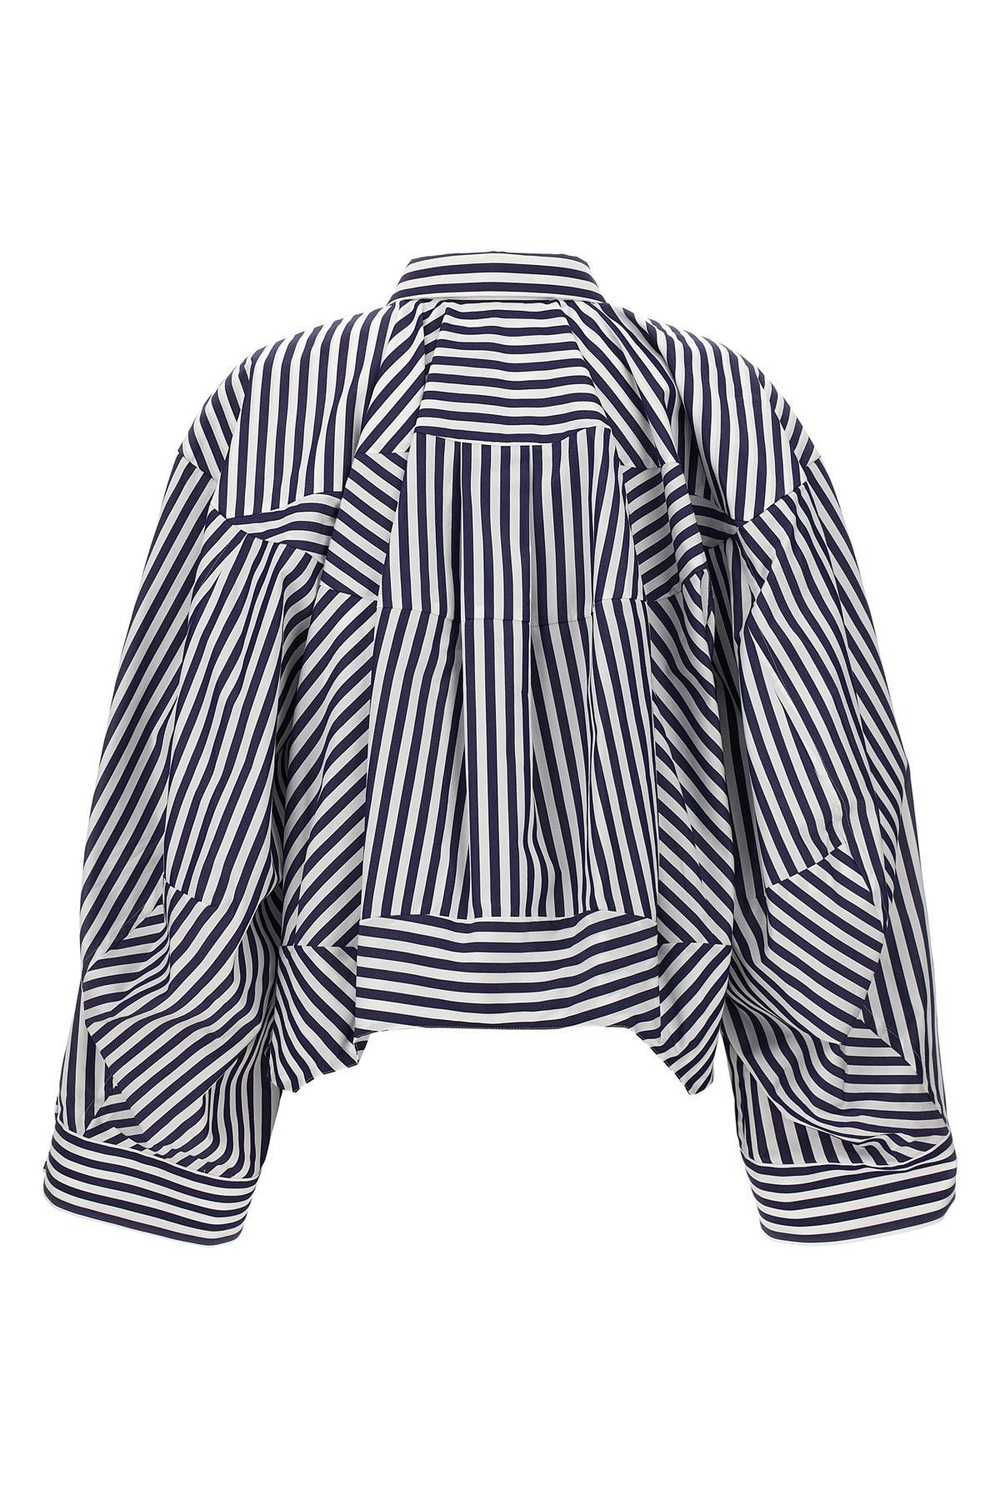 Sacai Striped shirt - image 2